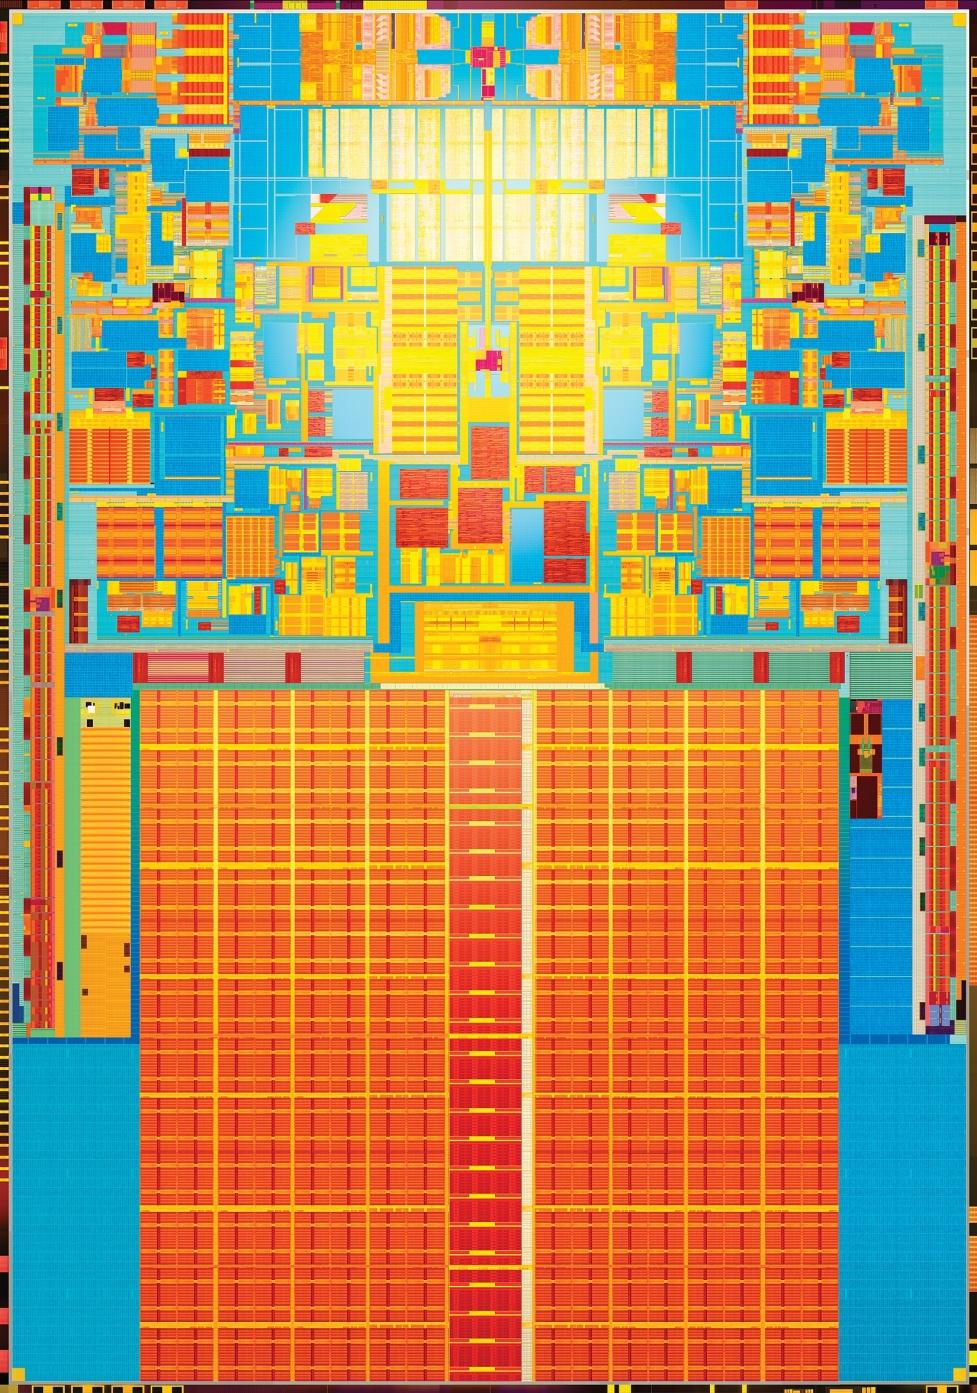 2008 Vintage Intel Microprocessor 45 nm (~200 atoms)